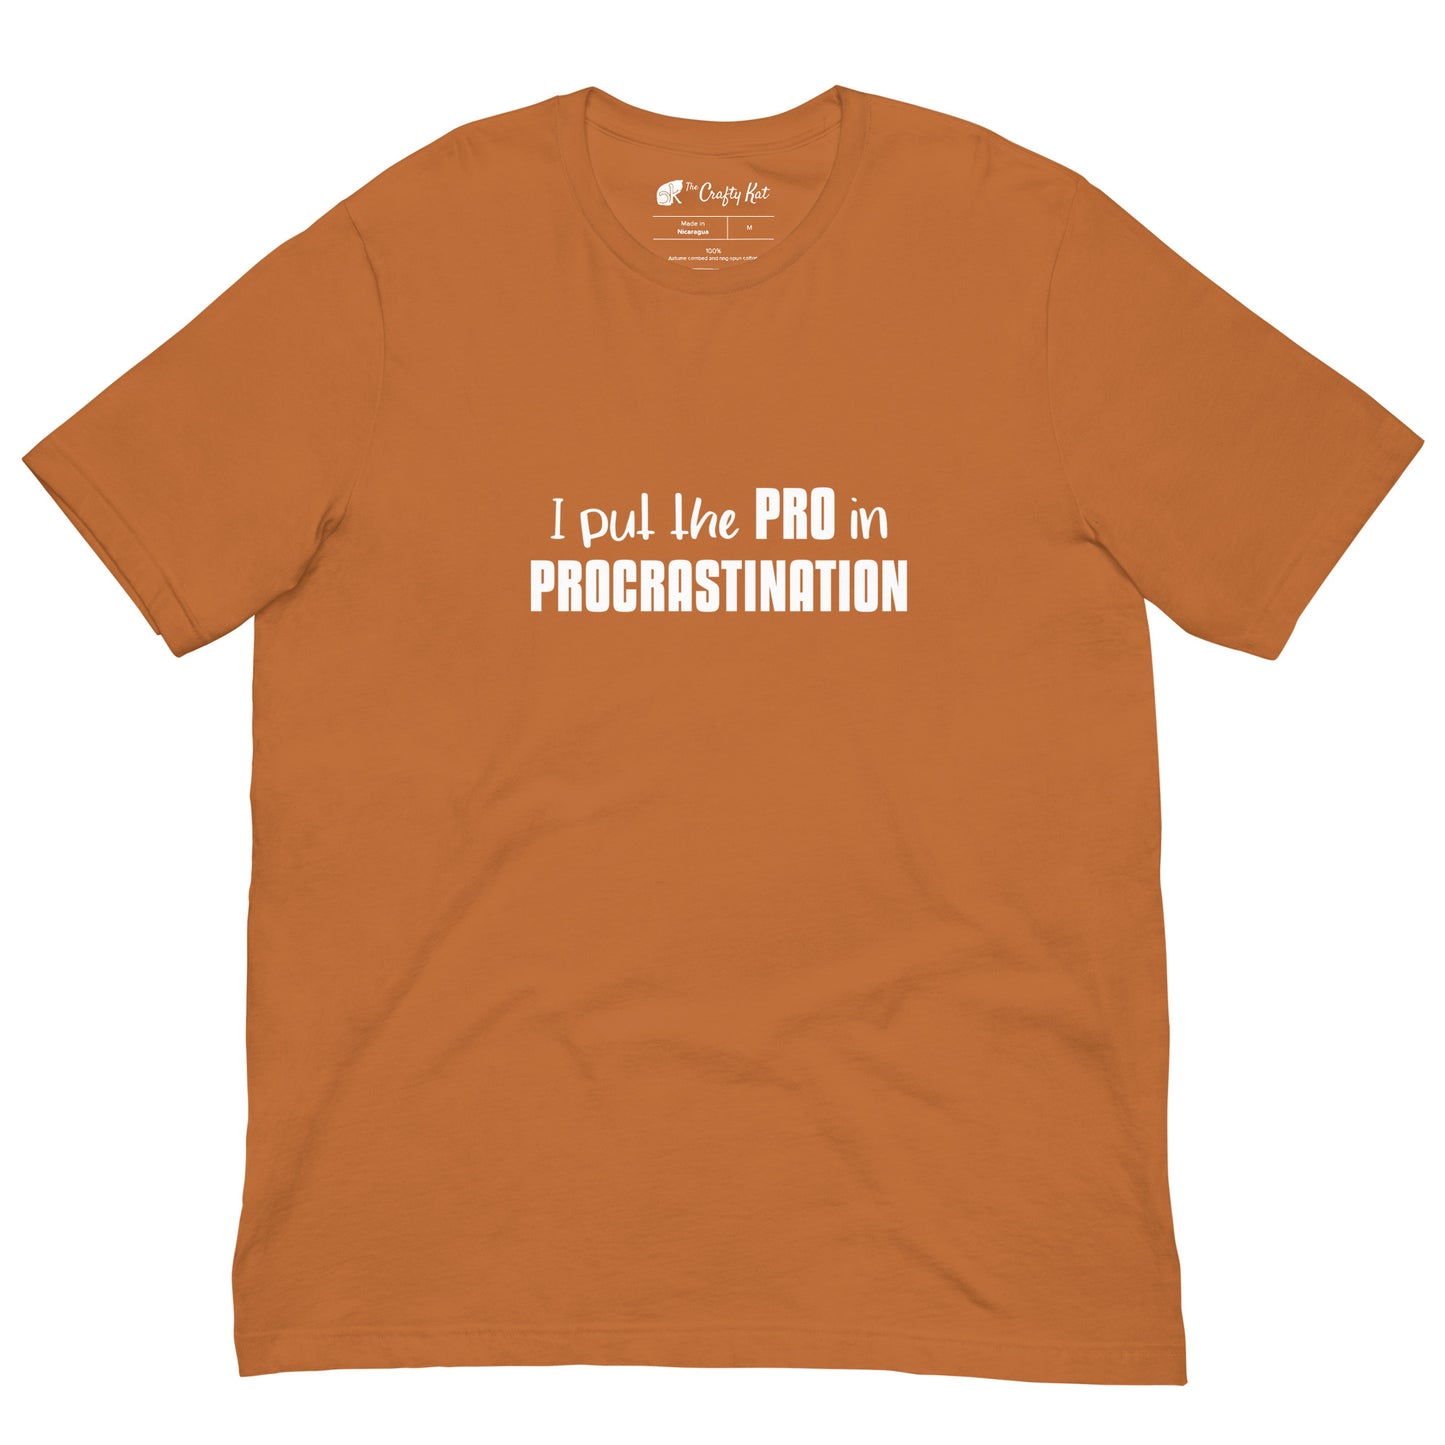 Toast (light orange) unisex t-shirt with text graphic: "I put the PRO in PROCRASTINATION"